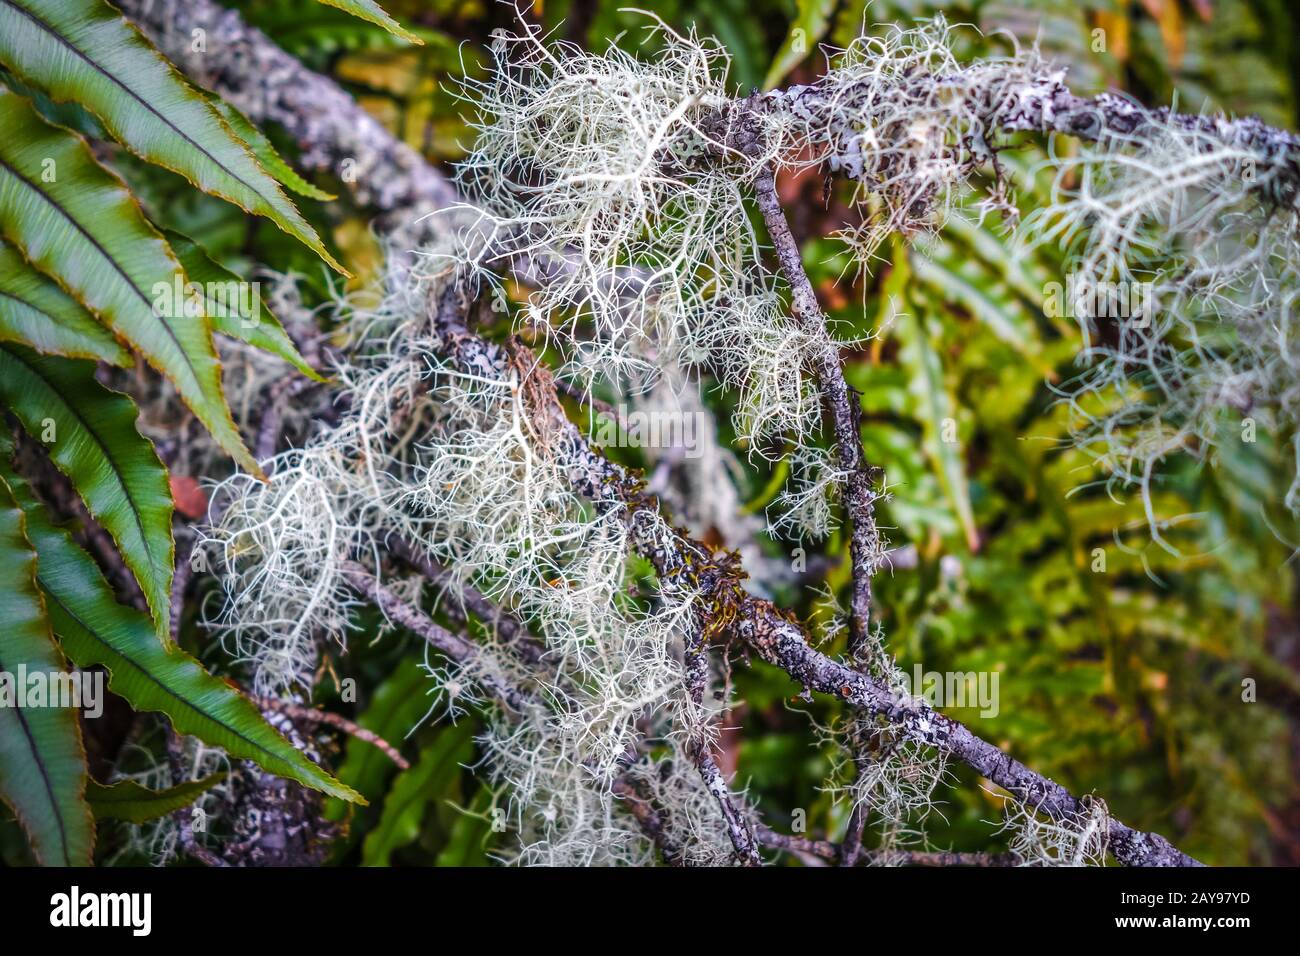 Lichen close-up photo Stock Photo